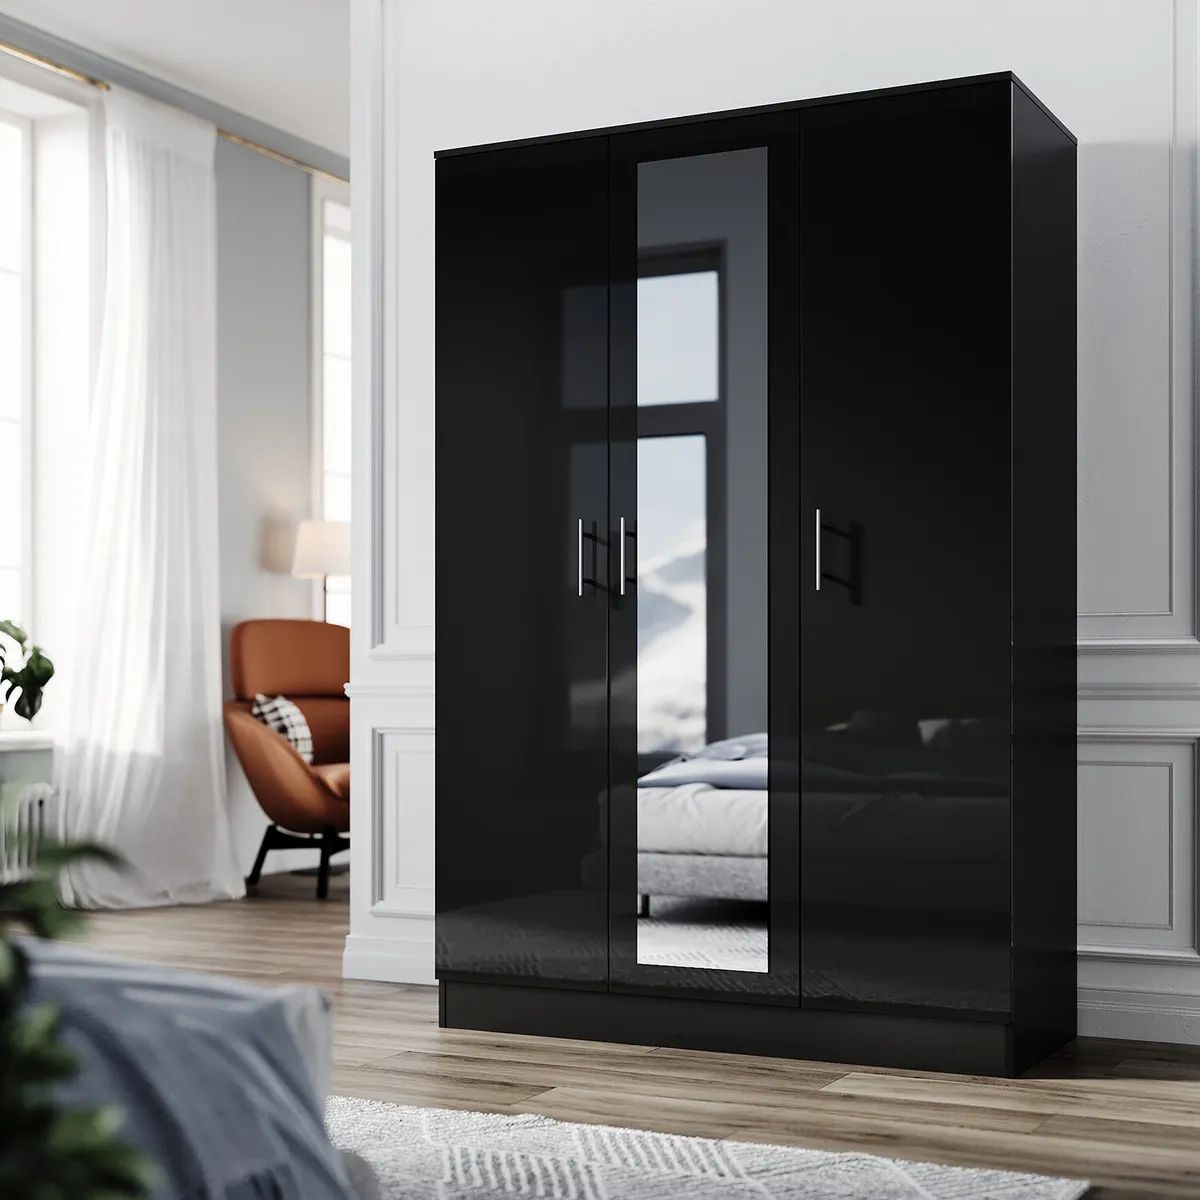 Black Gloss 3 Door Triple Mirrored Wardrobe With Hanging Rail & Shelves  Bedroom | Ebay Intended For 3 Door Black Gloss Wardrobes (View 6 of 15)